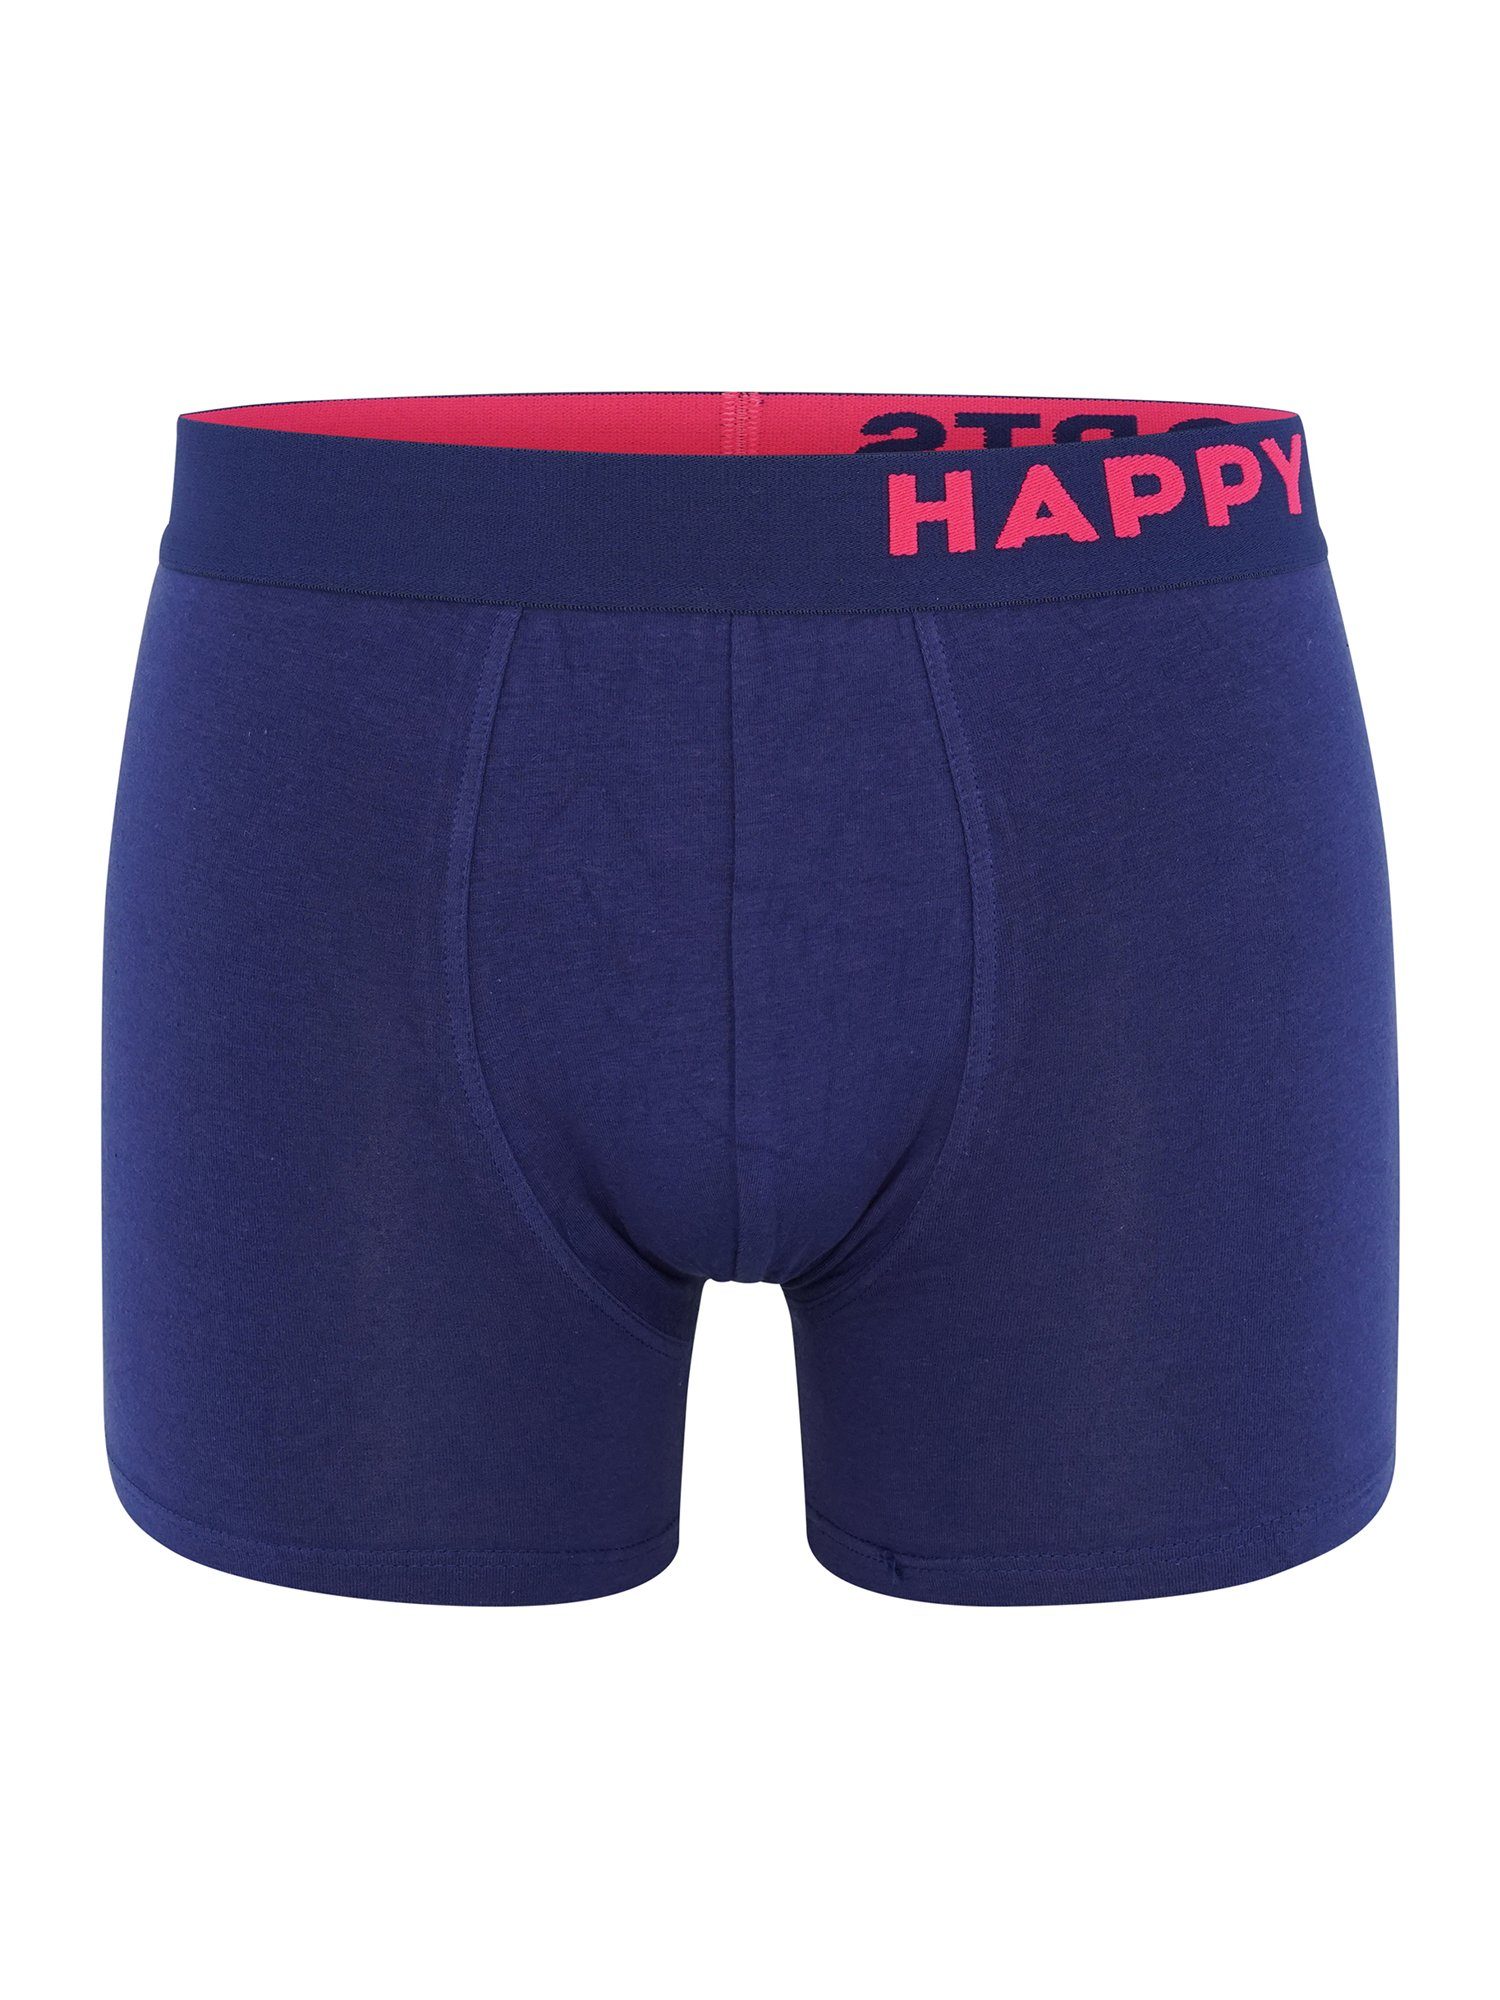 Trunks Neon SHORTS Motivprint Pants Retro HAPPY